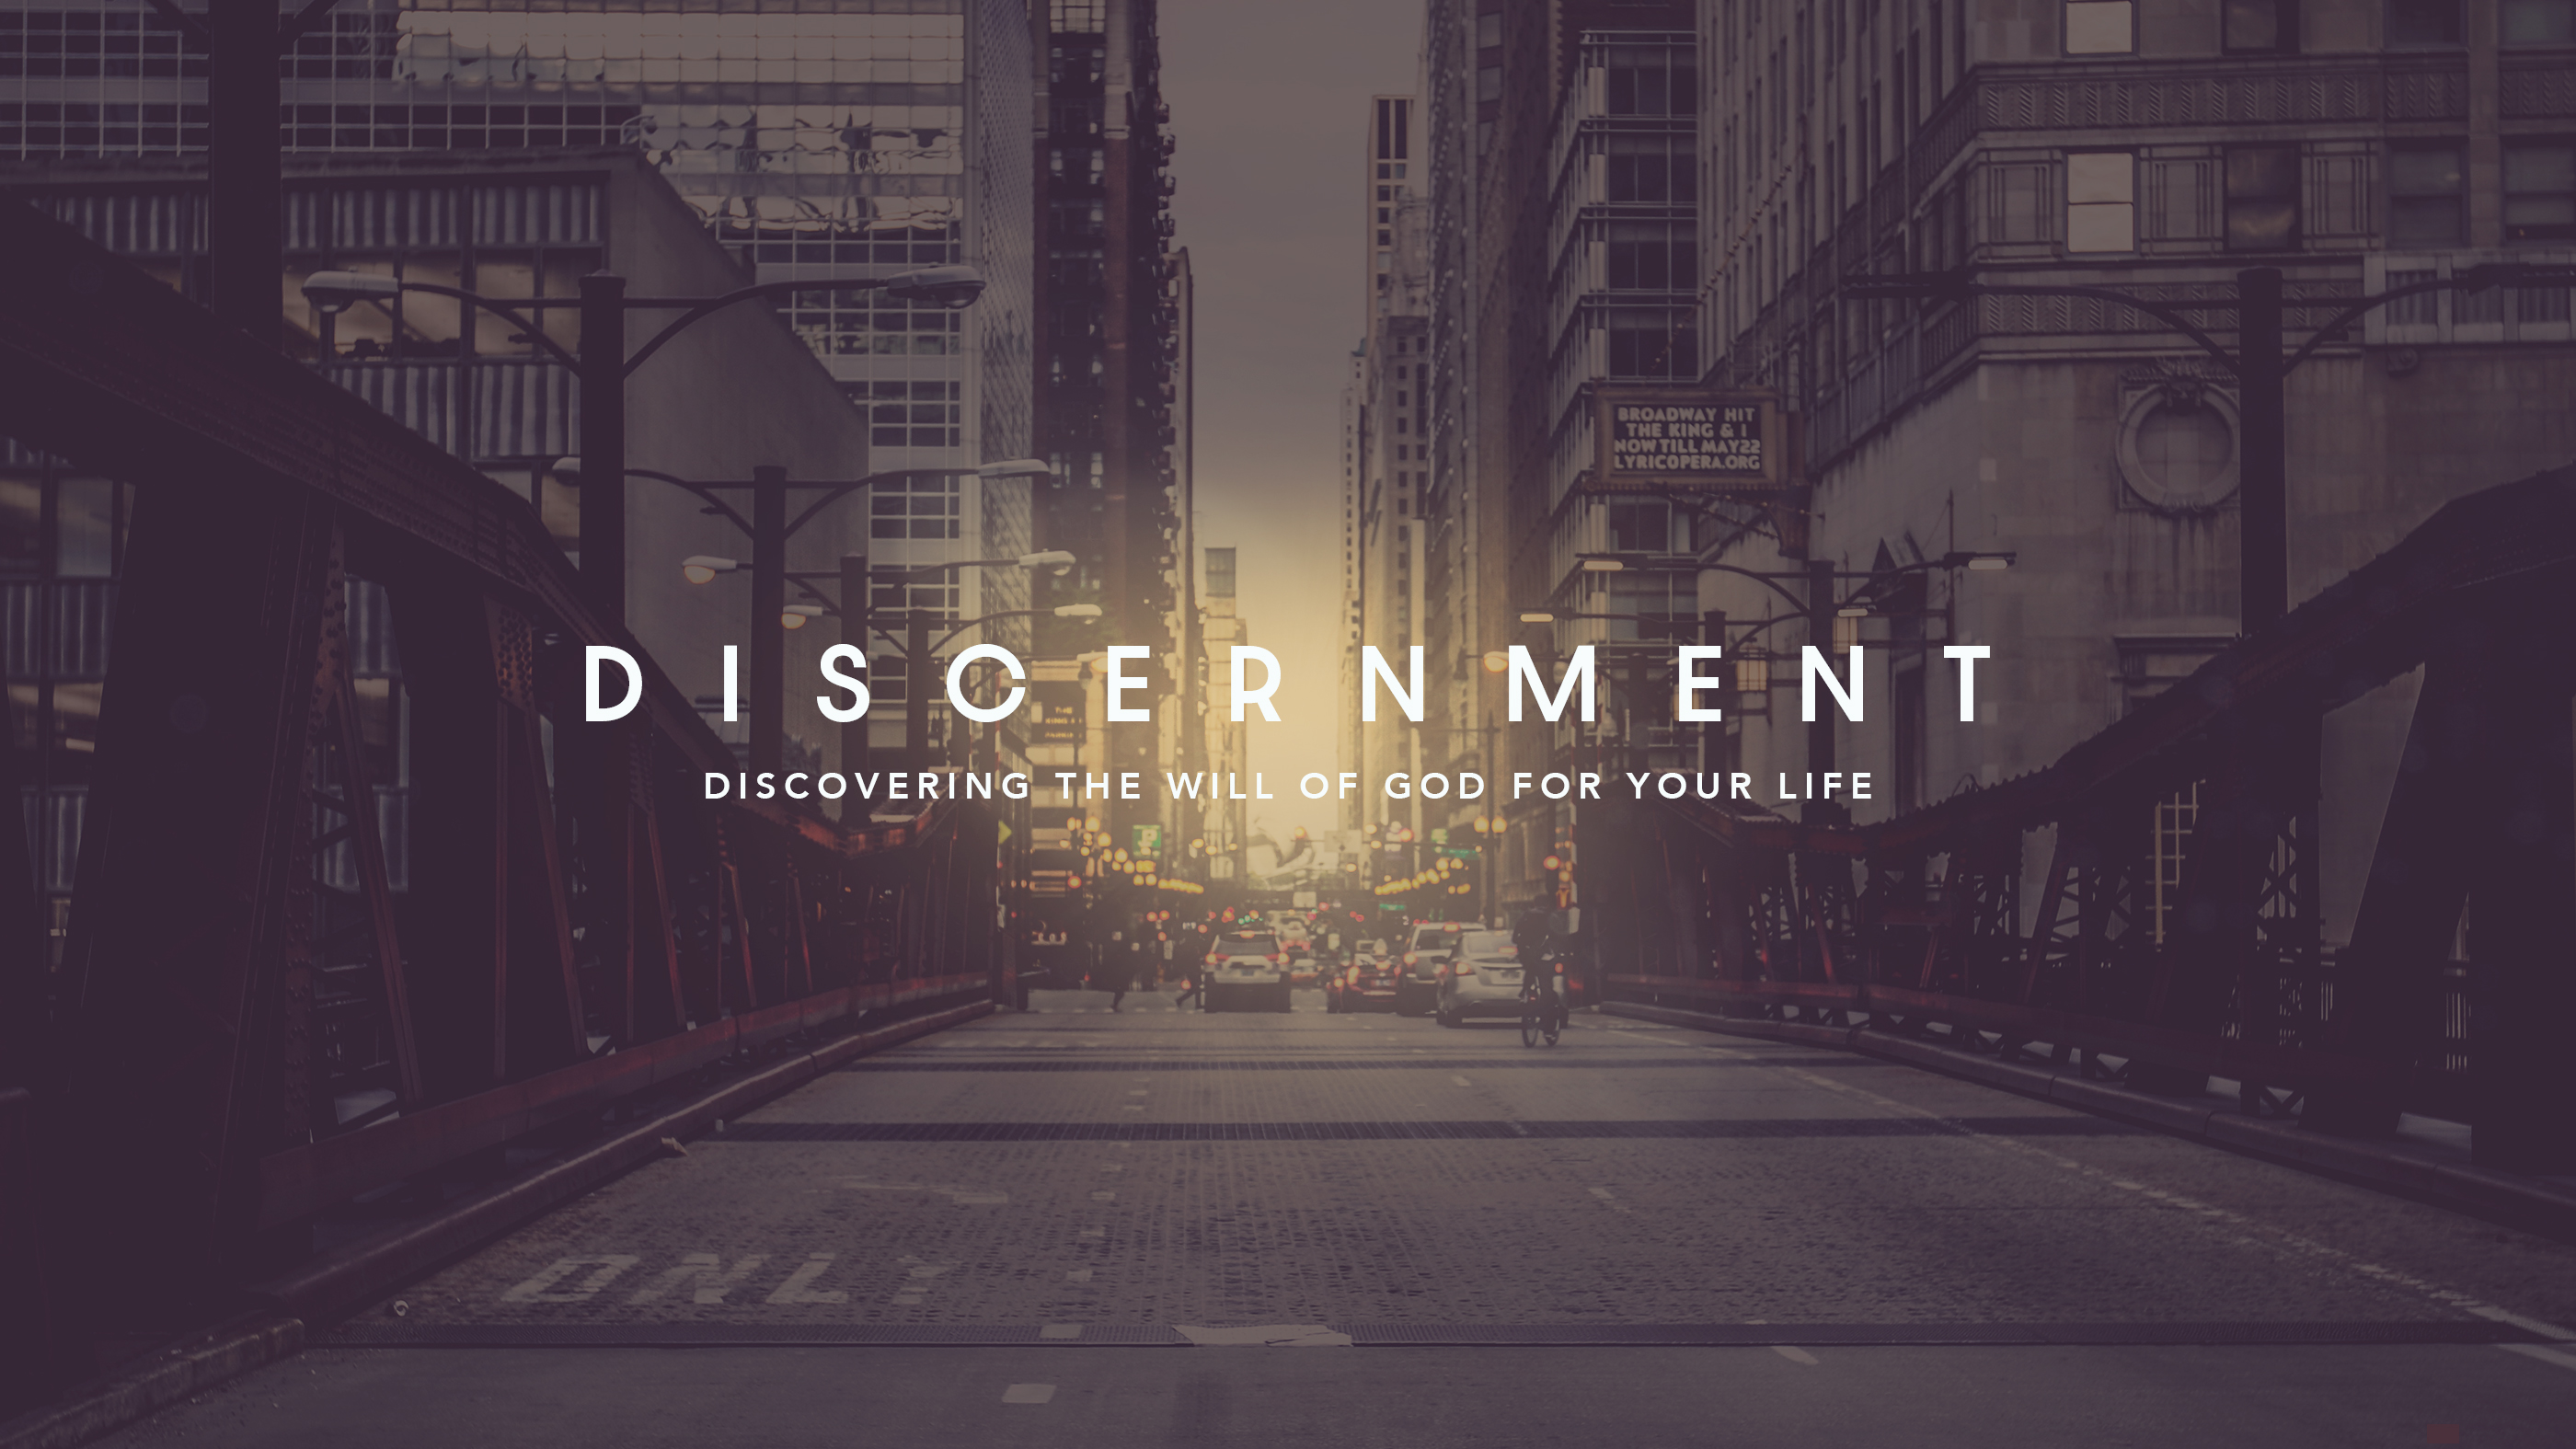 Discernment Workshop Image